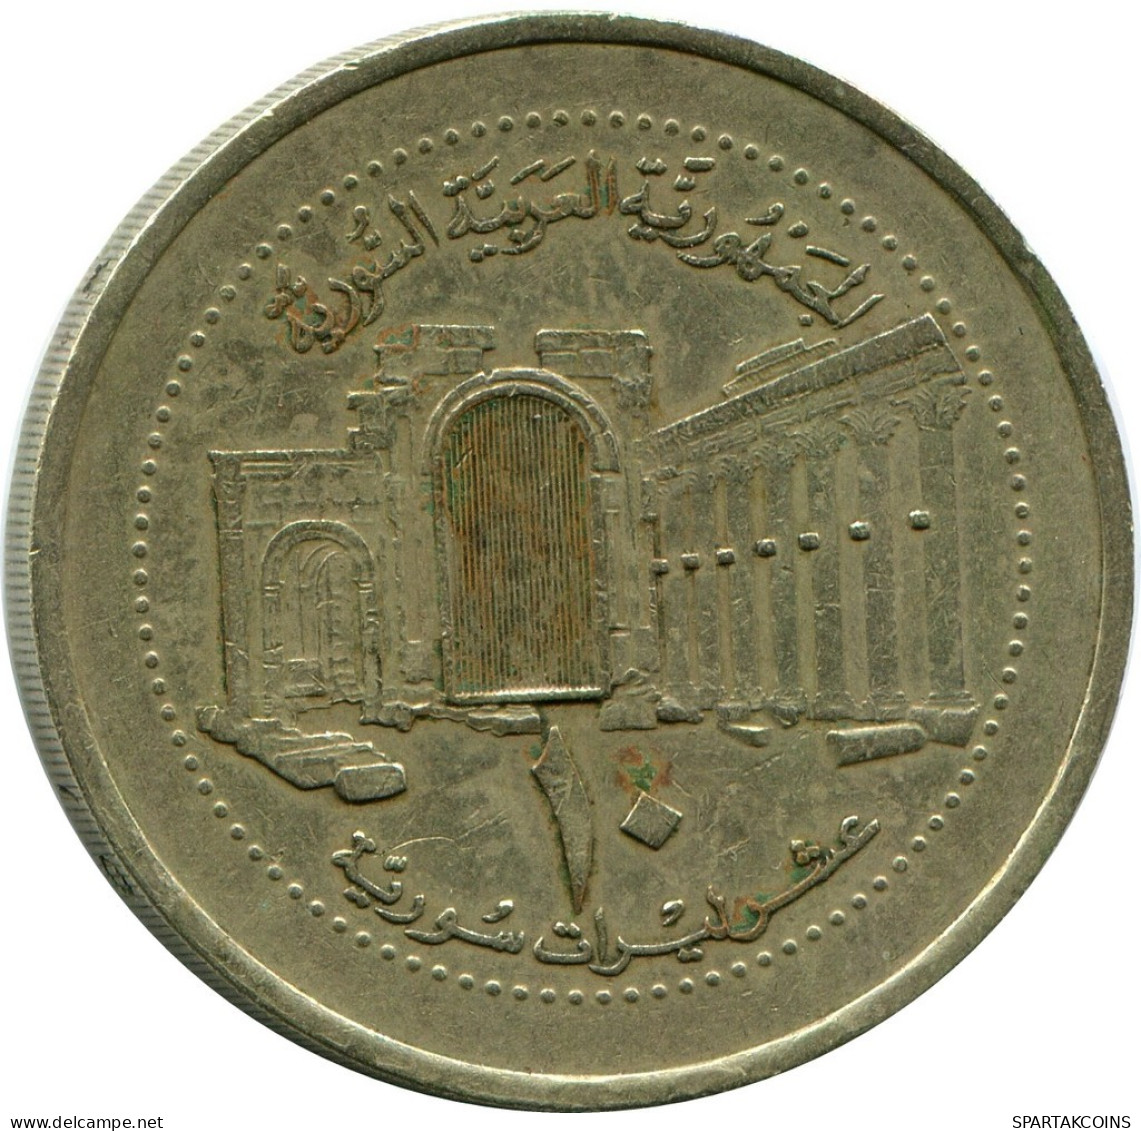 10 LIRAS / POUNDS 2003 SYRIEN SYRIA Islamisch Münze #AP566.D.D.A - Siria